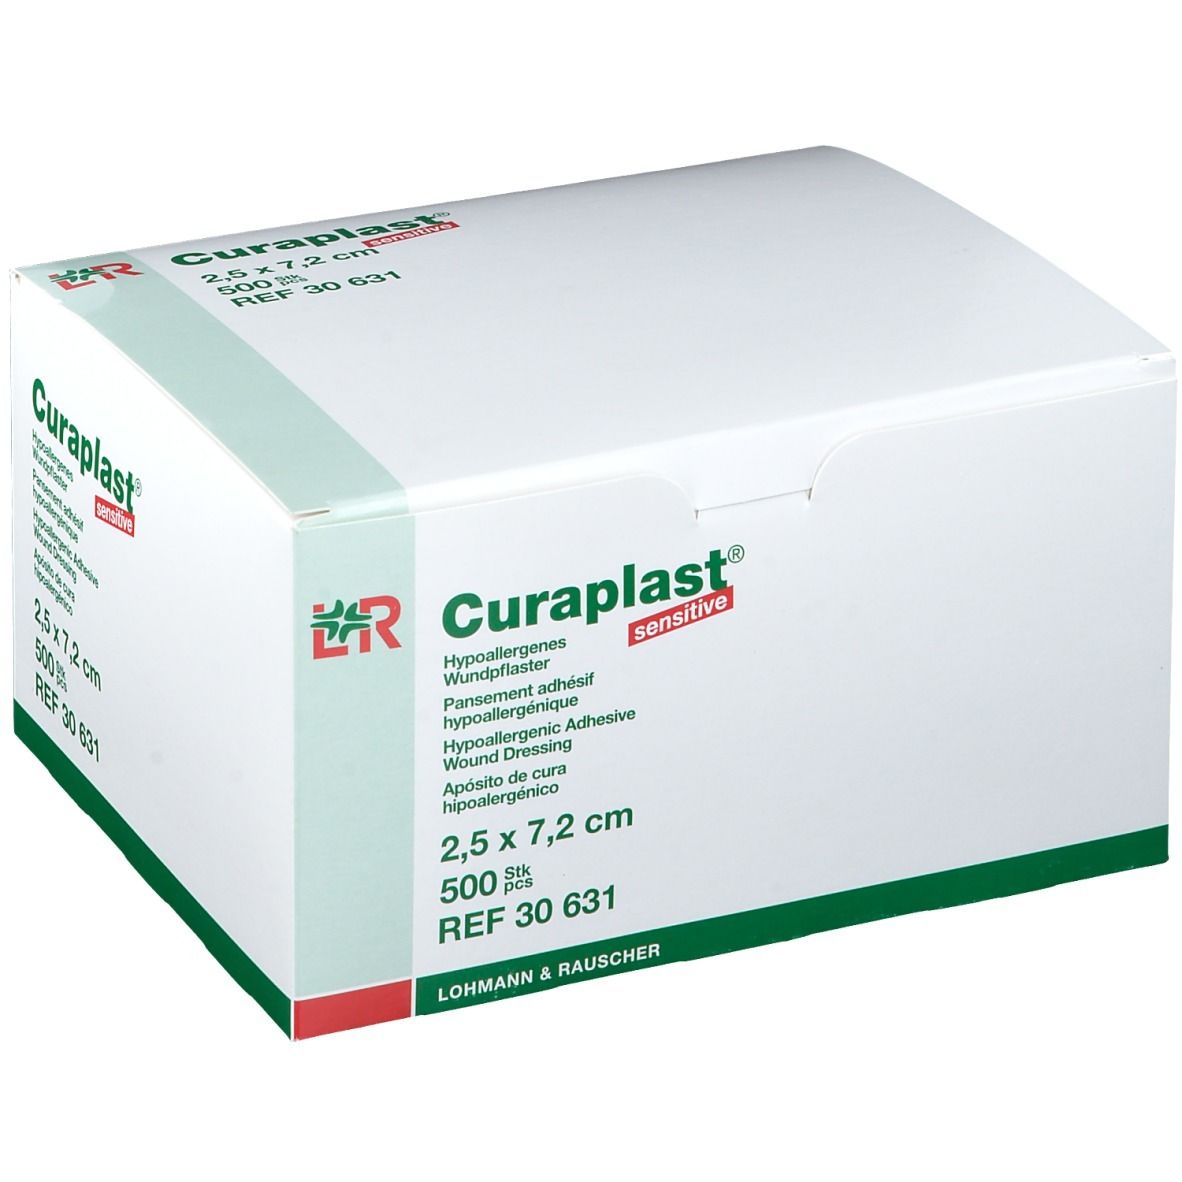 Curaplast® sensitiv strips 2,5 cm x 7,2 cm